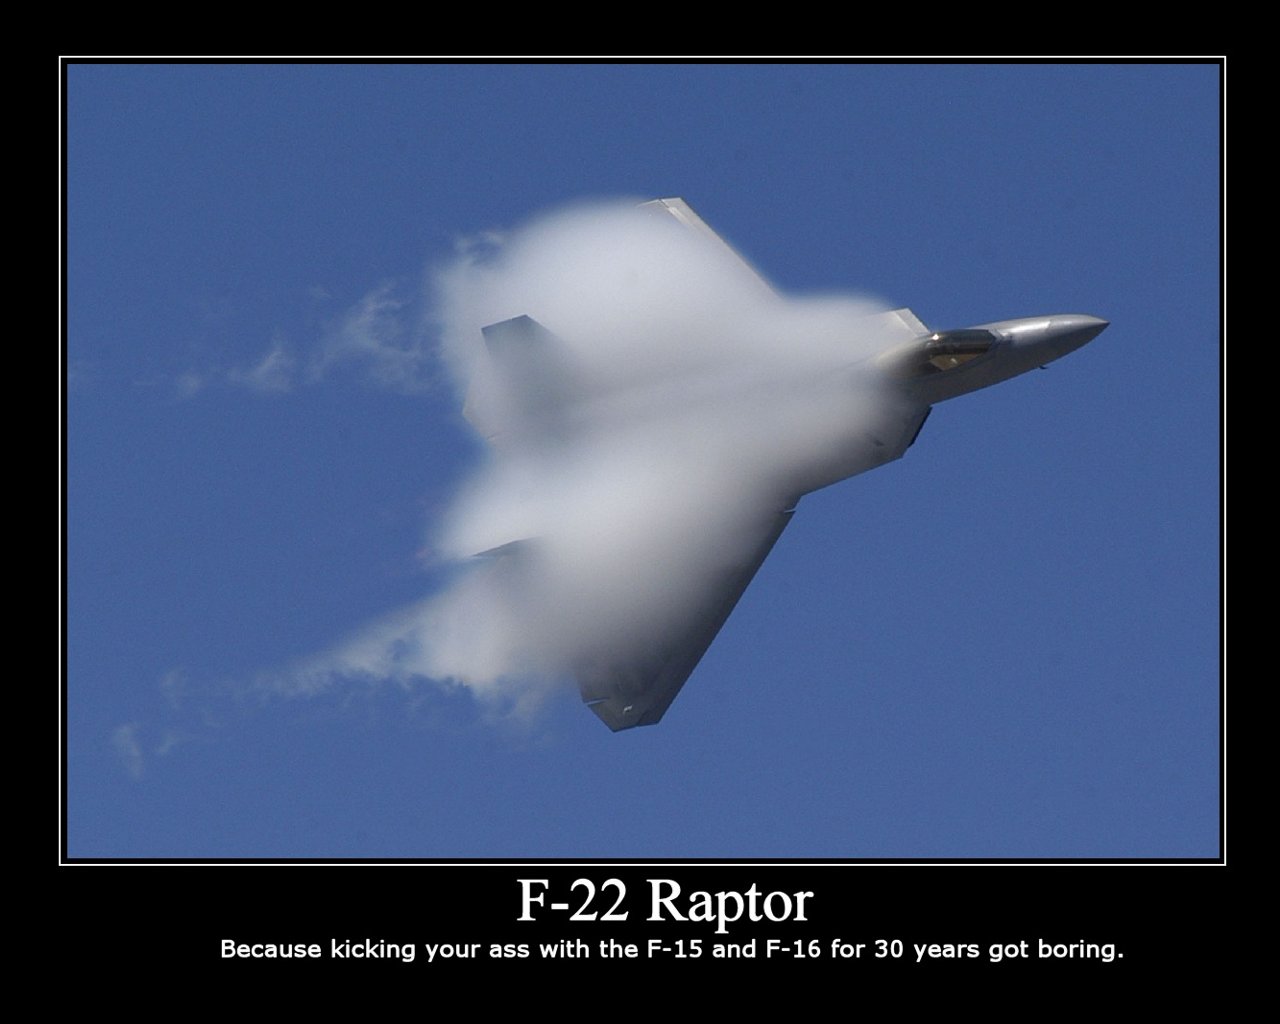 F-22_motivational_poster. I've made it my wallpaper on Ubuntu 9.04: